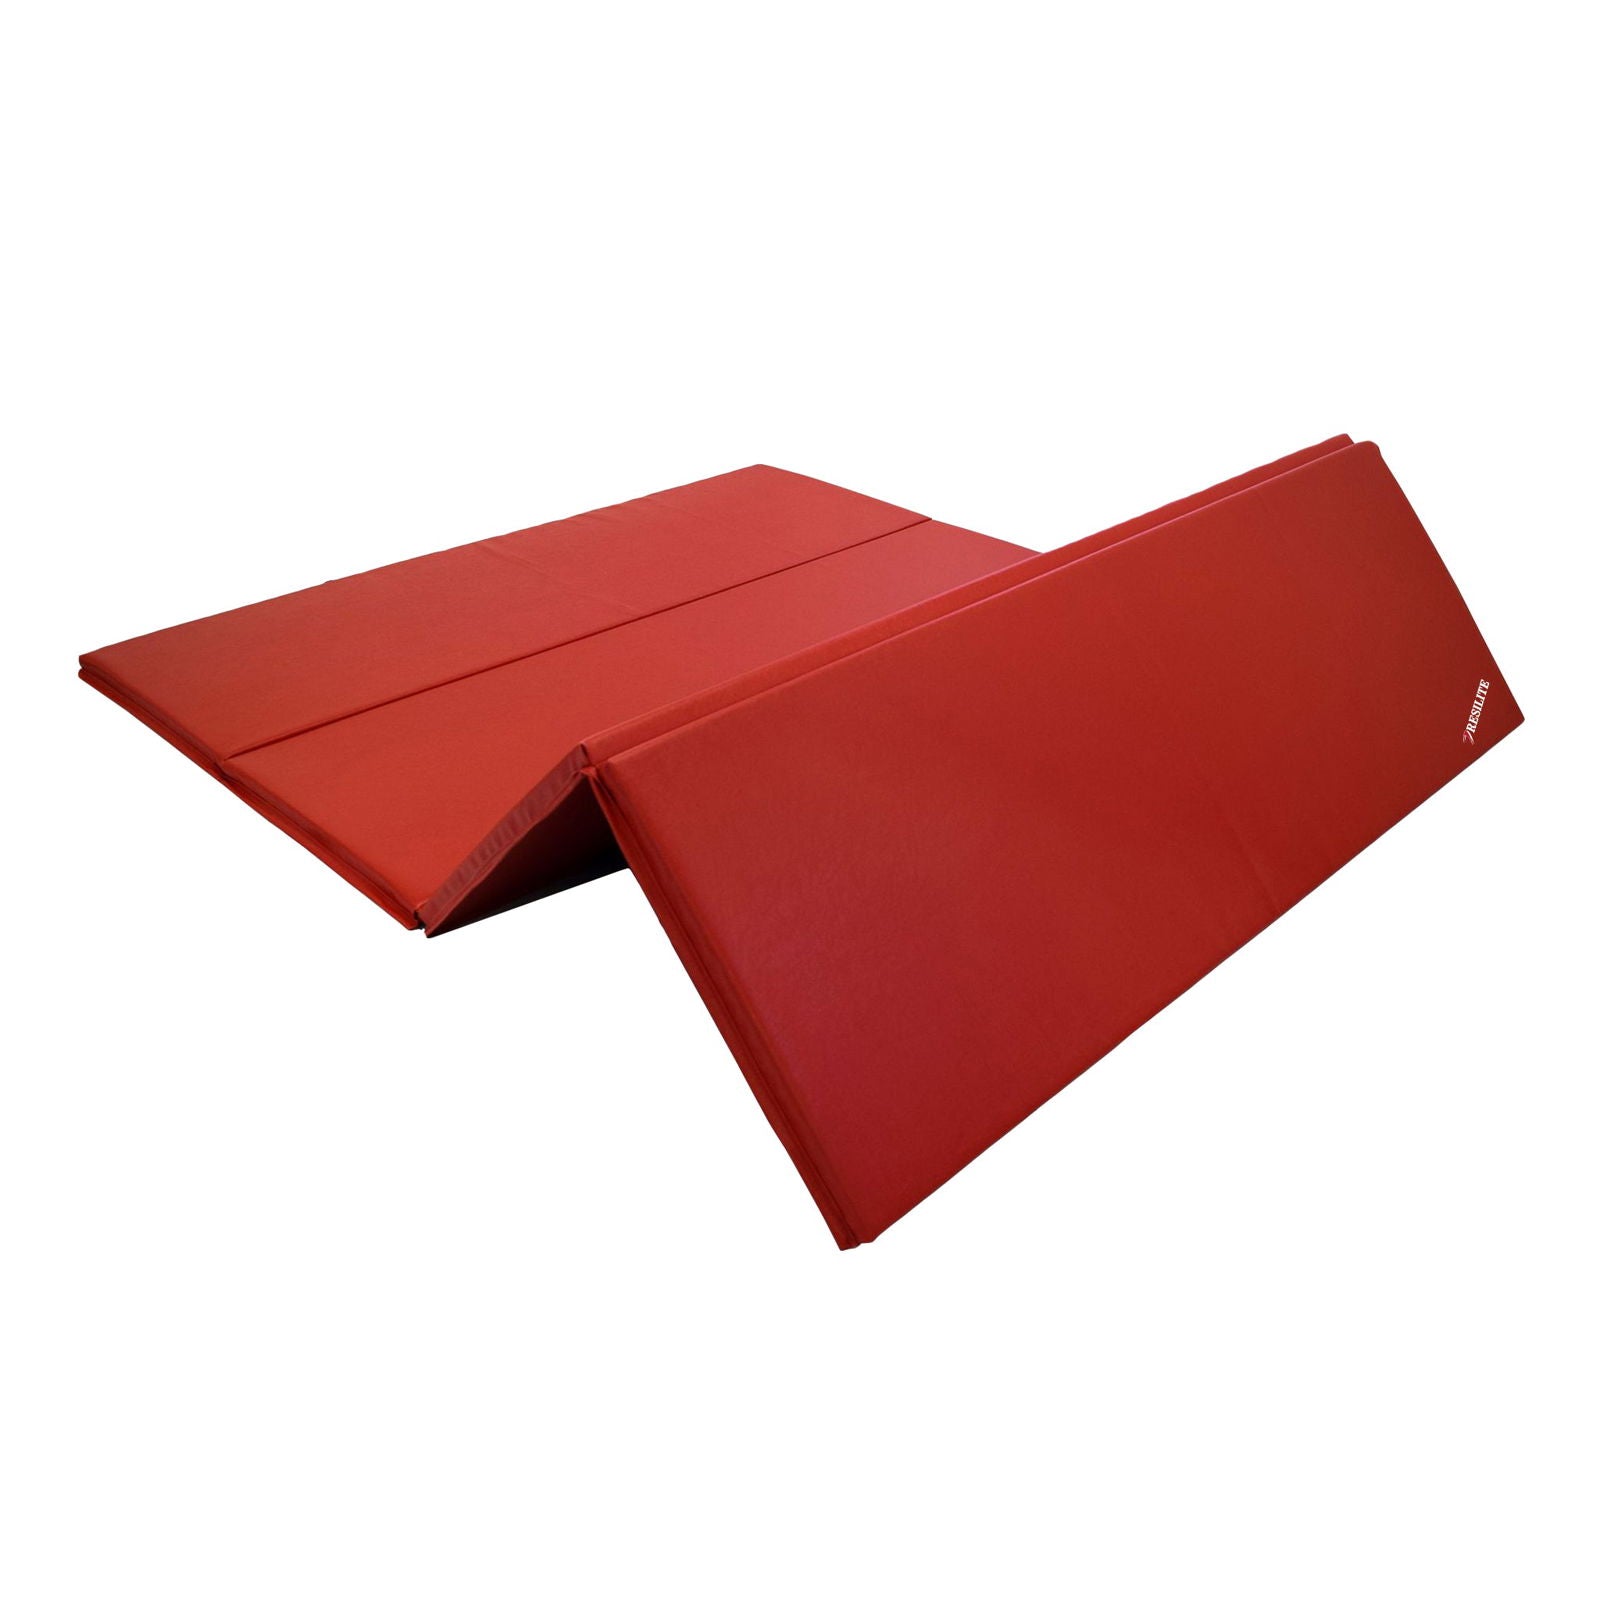 1 3/8" Senior Folding Mats - Resilite Mats